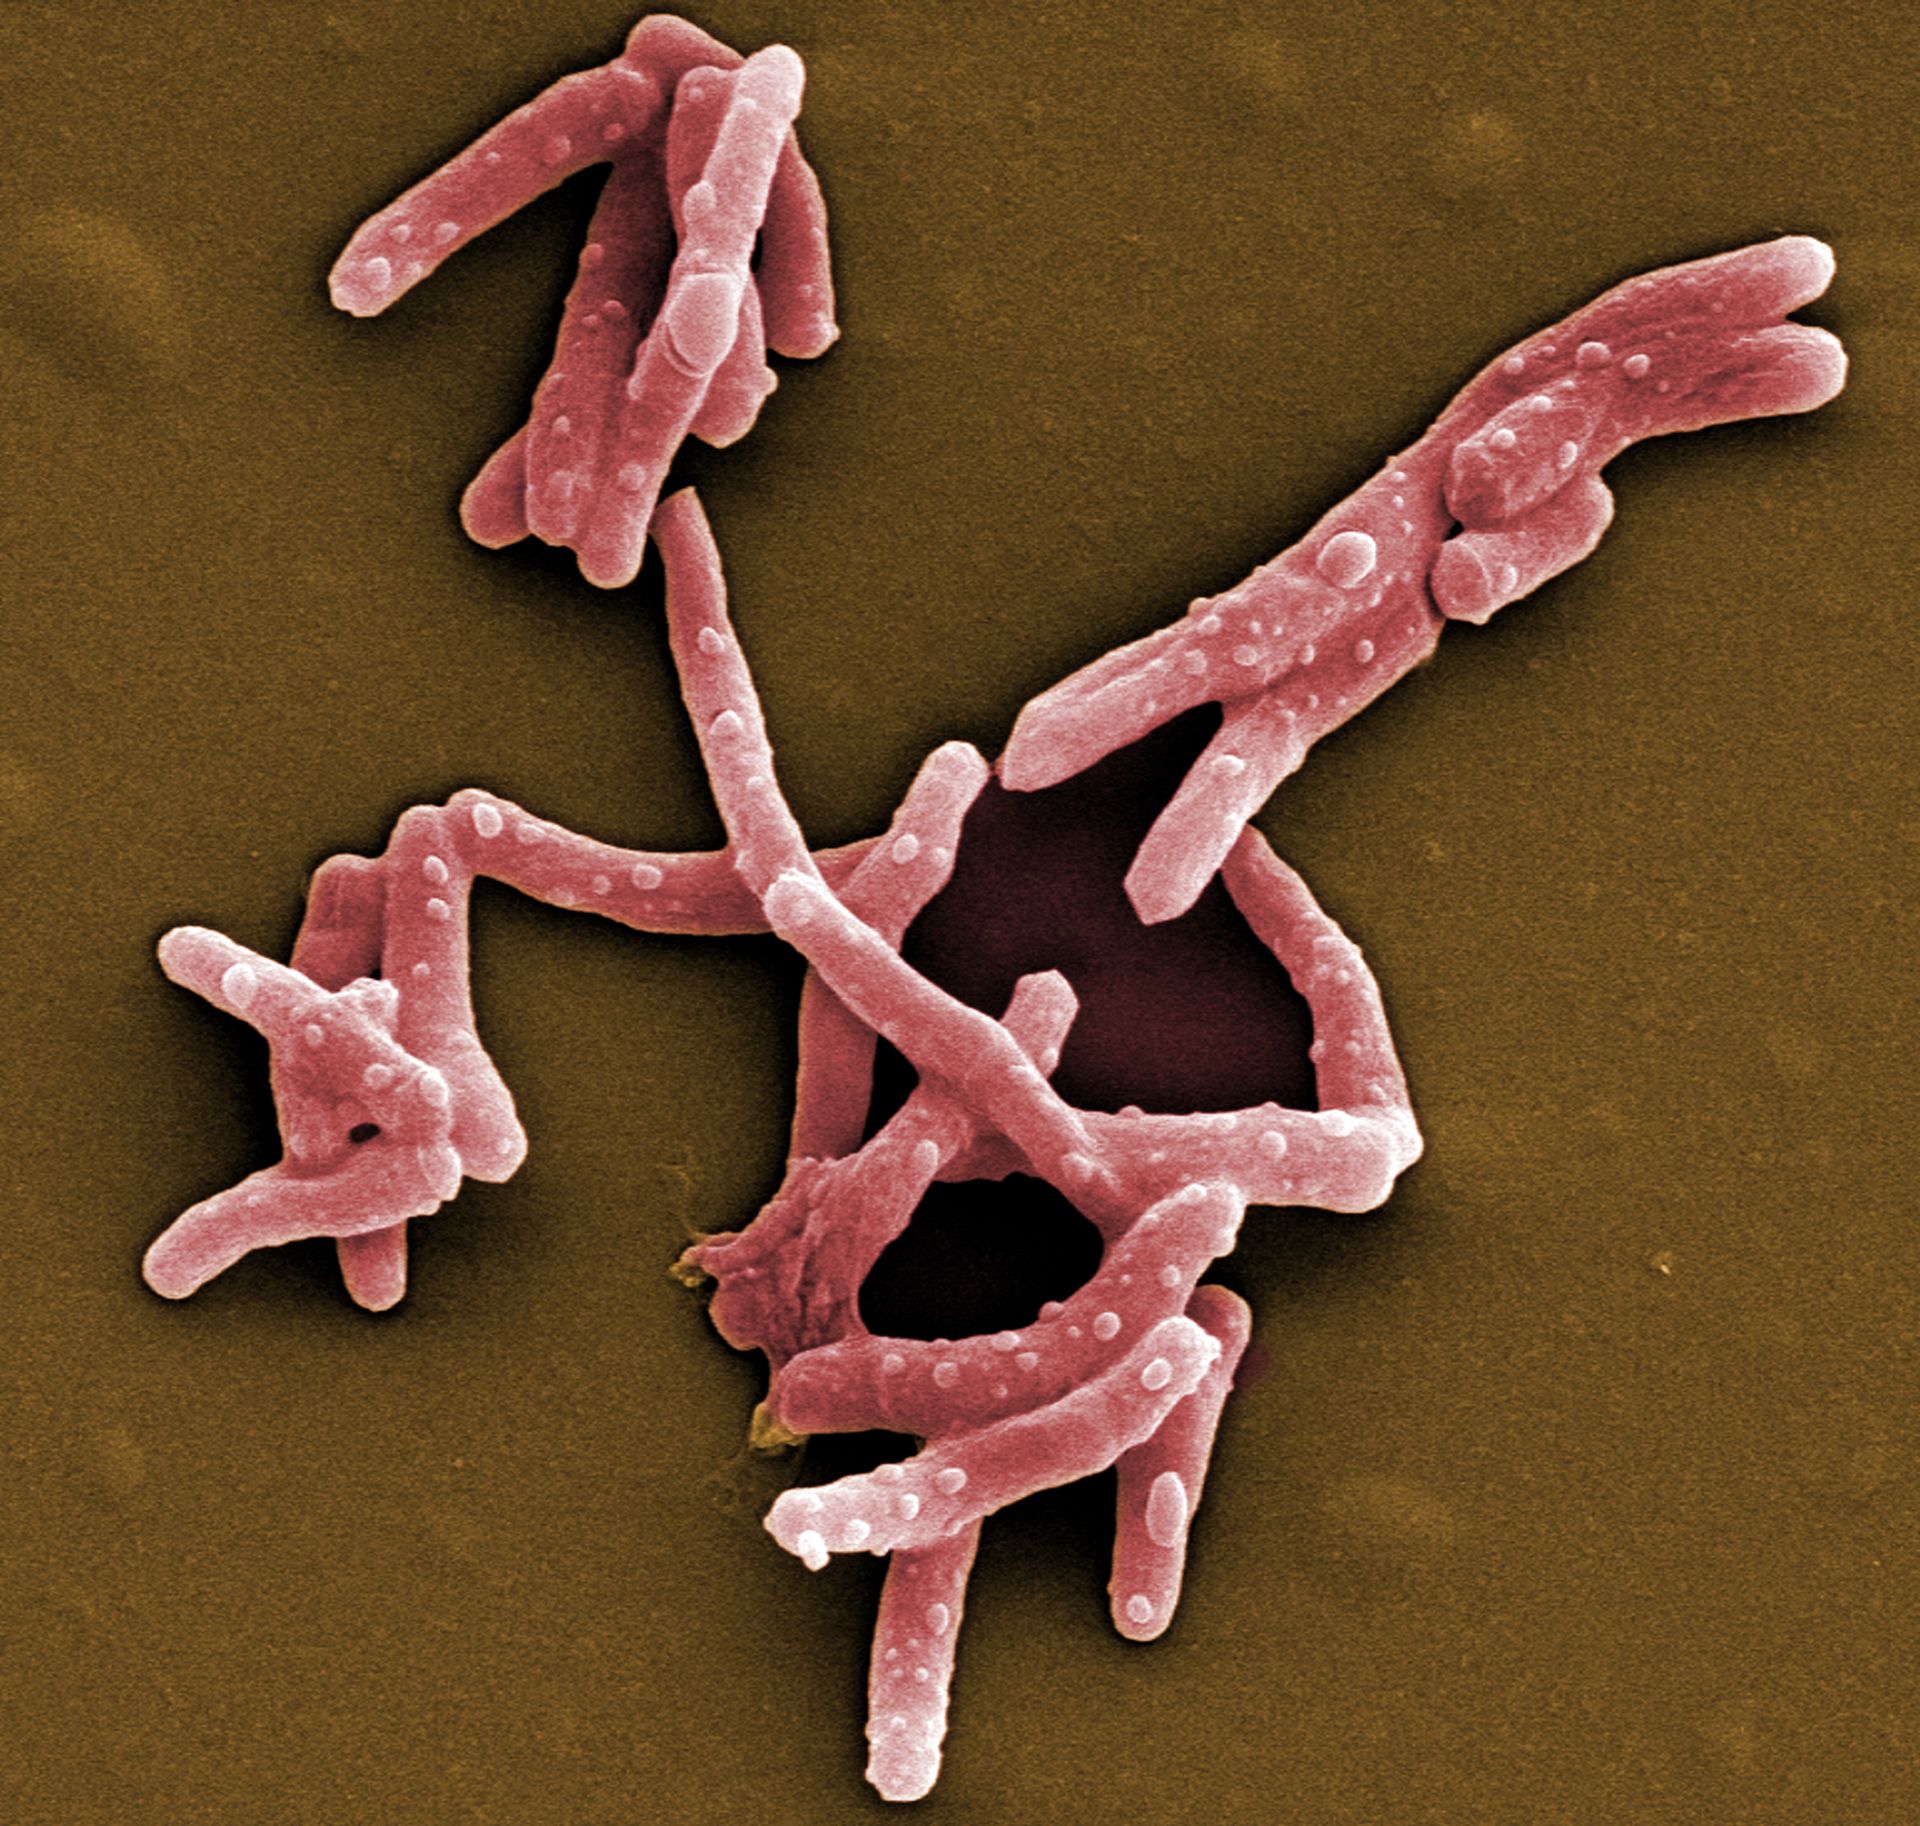 Rasterelektronenmikroskopische Aufnahme von Mycobacterium tuberculosis. 